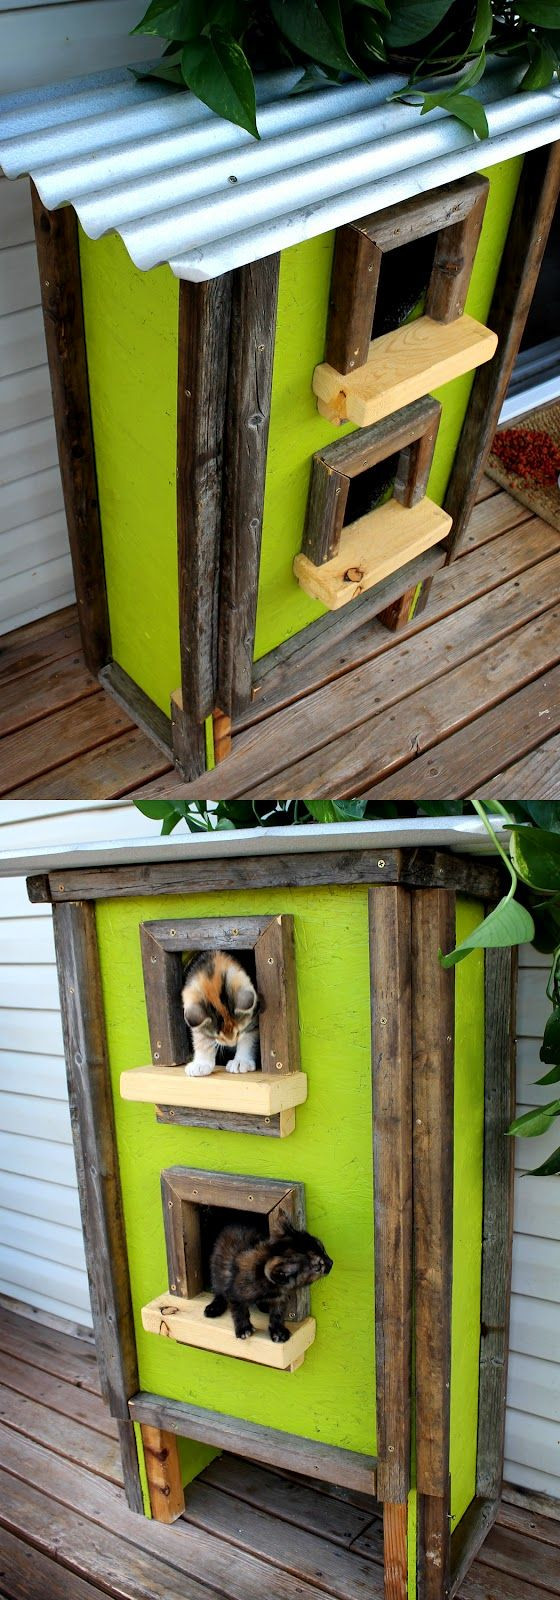 DIY Outdoor Cat Houses
 Best 25 Cat houses ideas on Pinterest